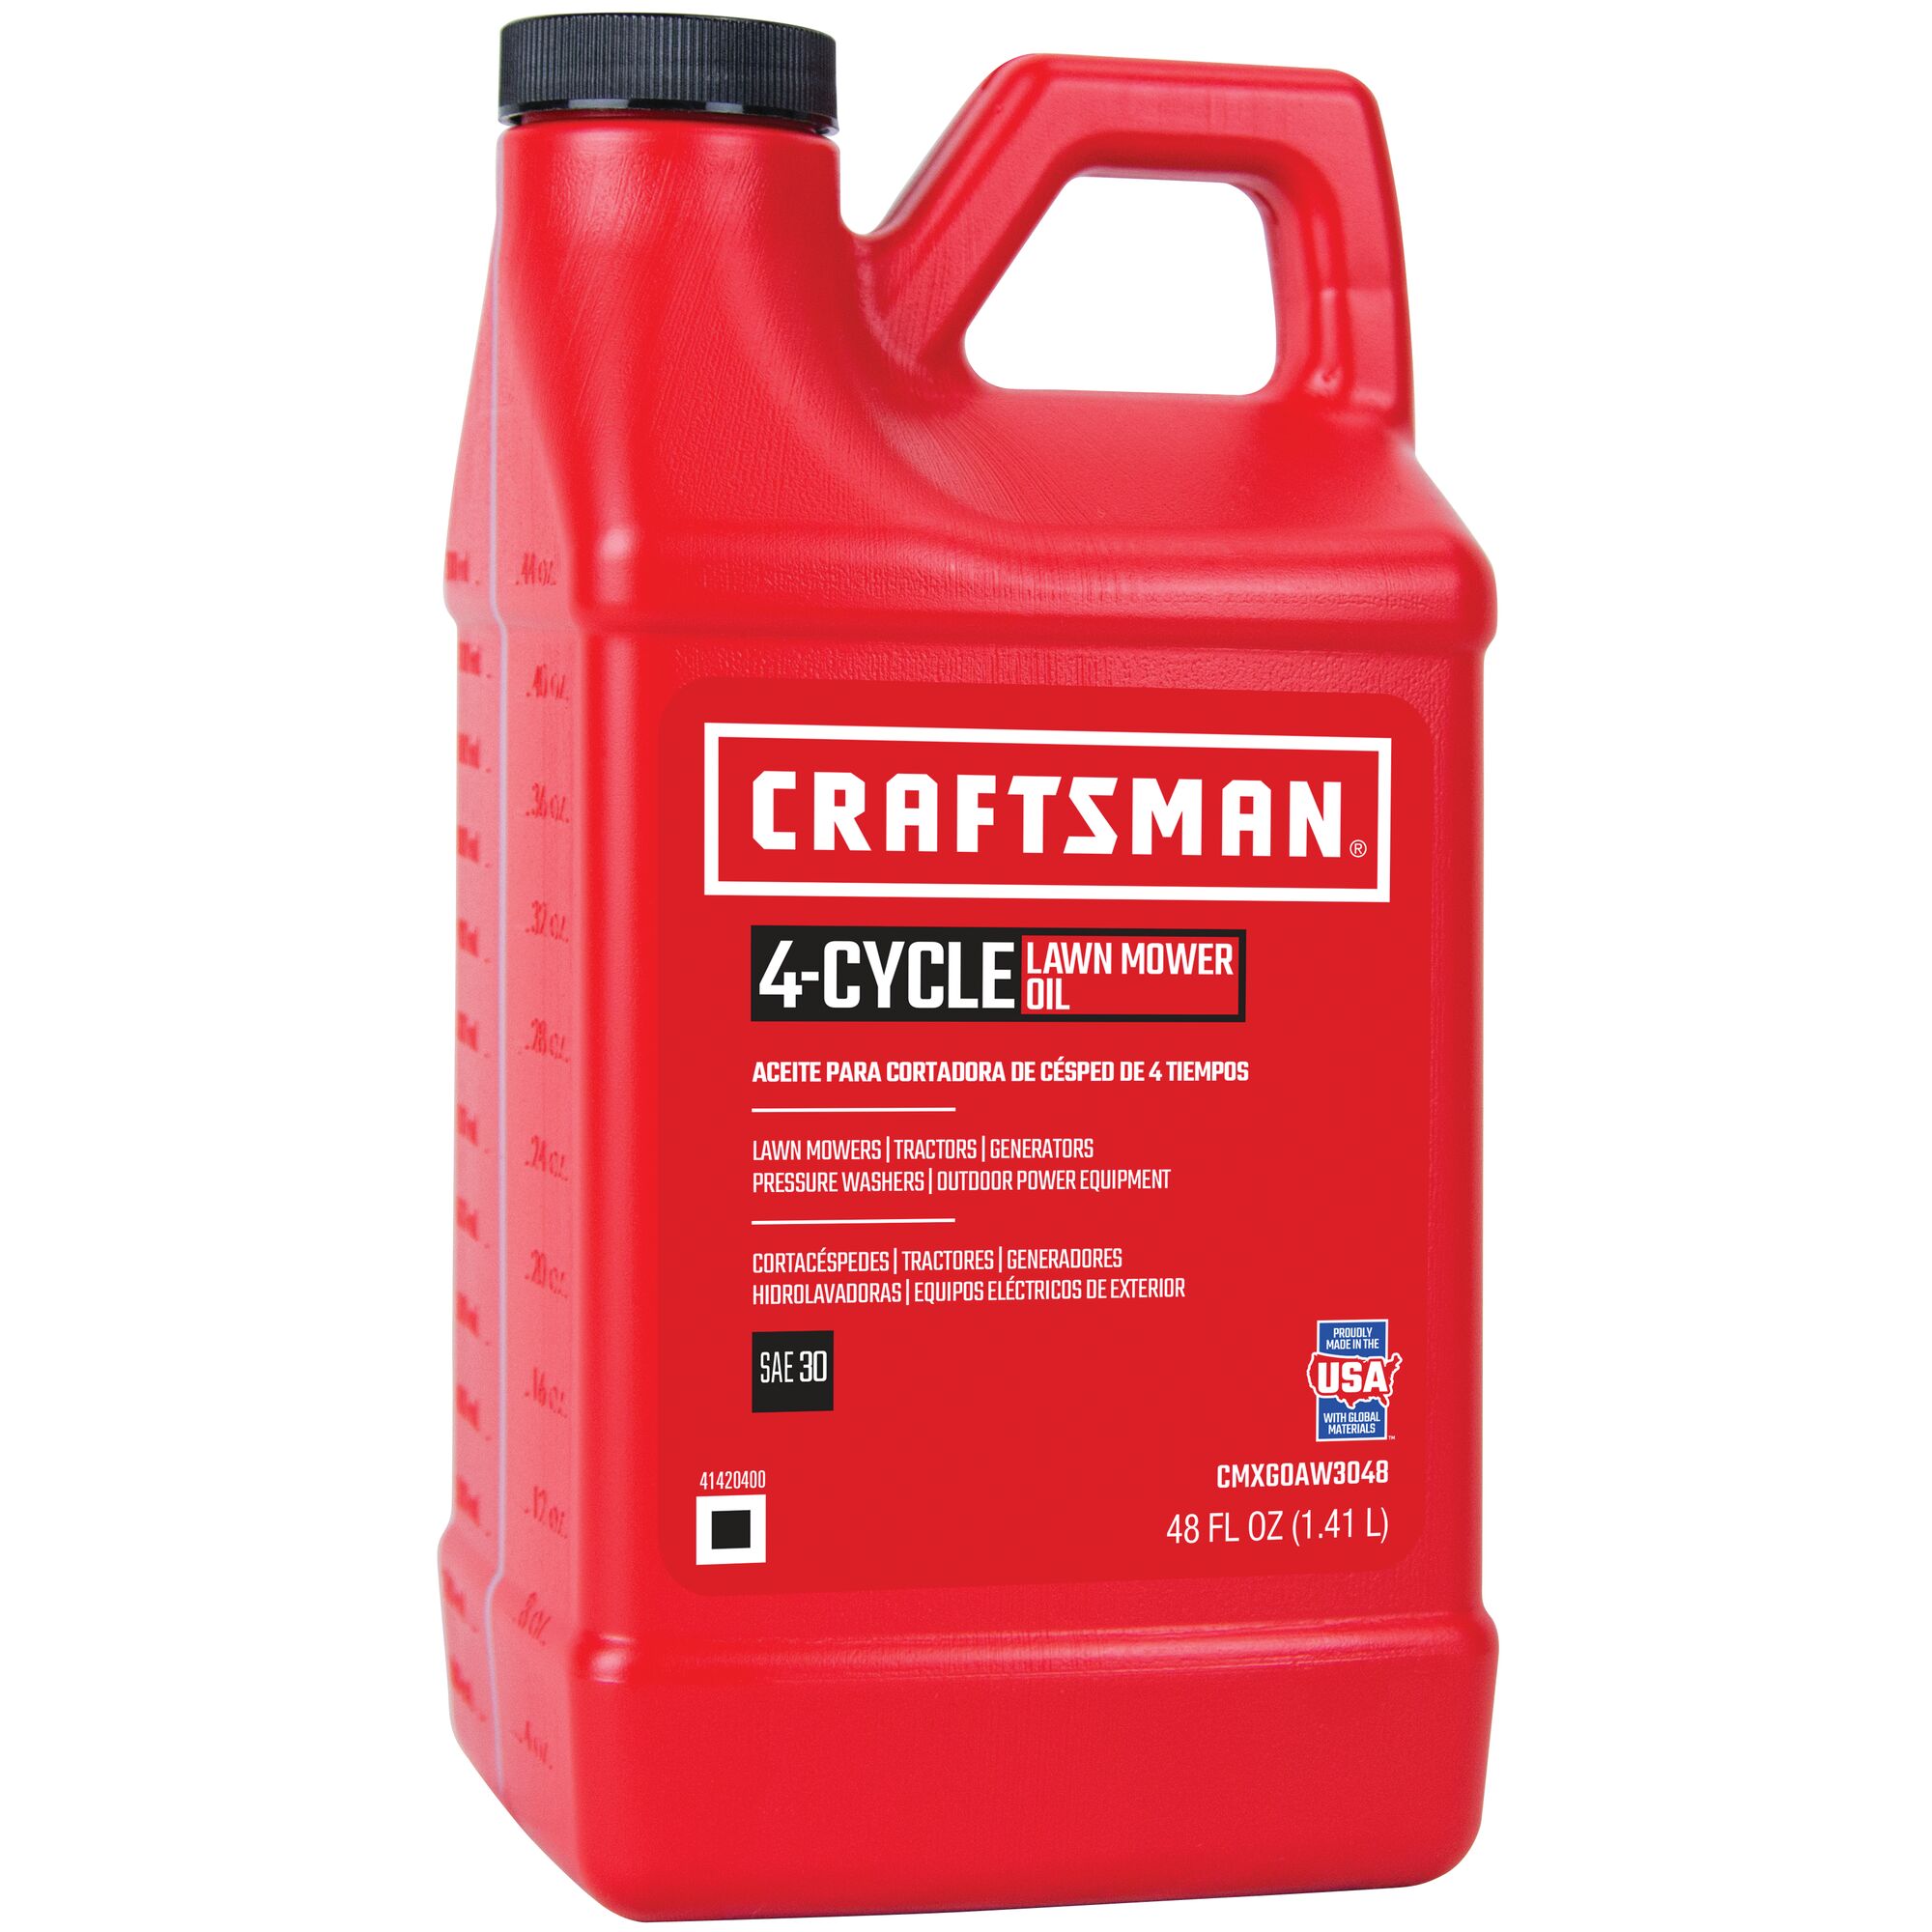 Craftsman 4 cycle lawn mower oil.